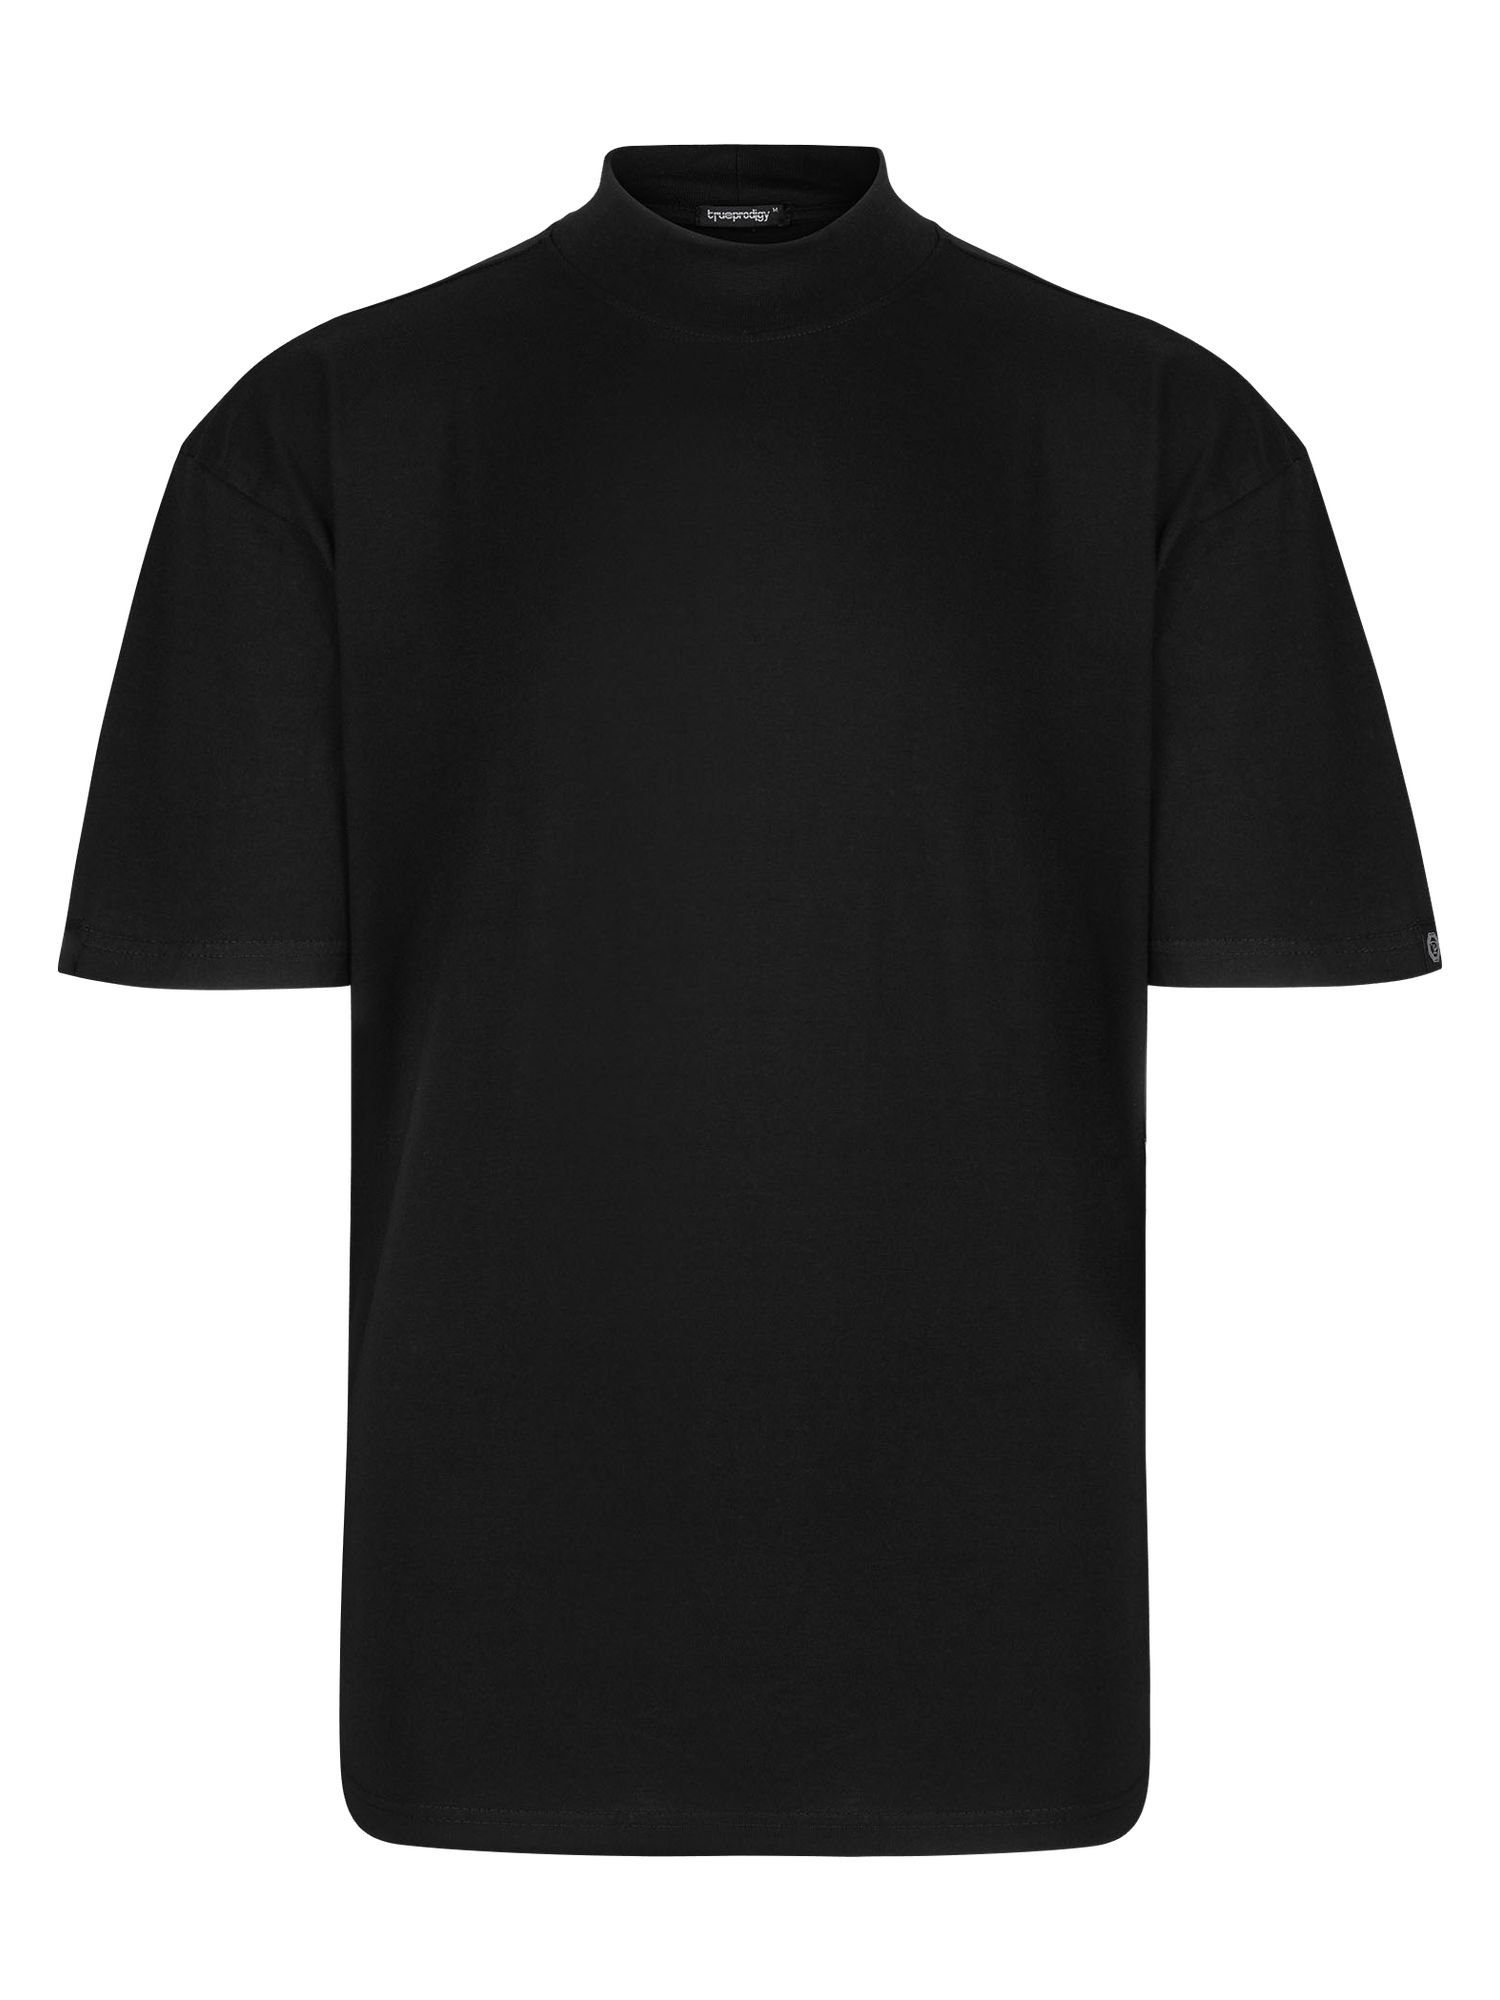 dicker trueprodigy Phoenix Black Stoff Oversize-Shirt Stehkragen Logo